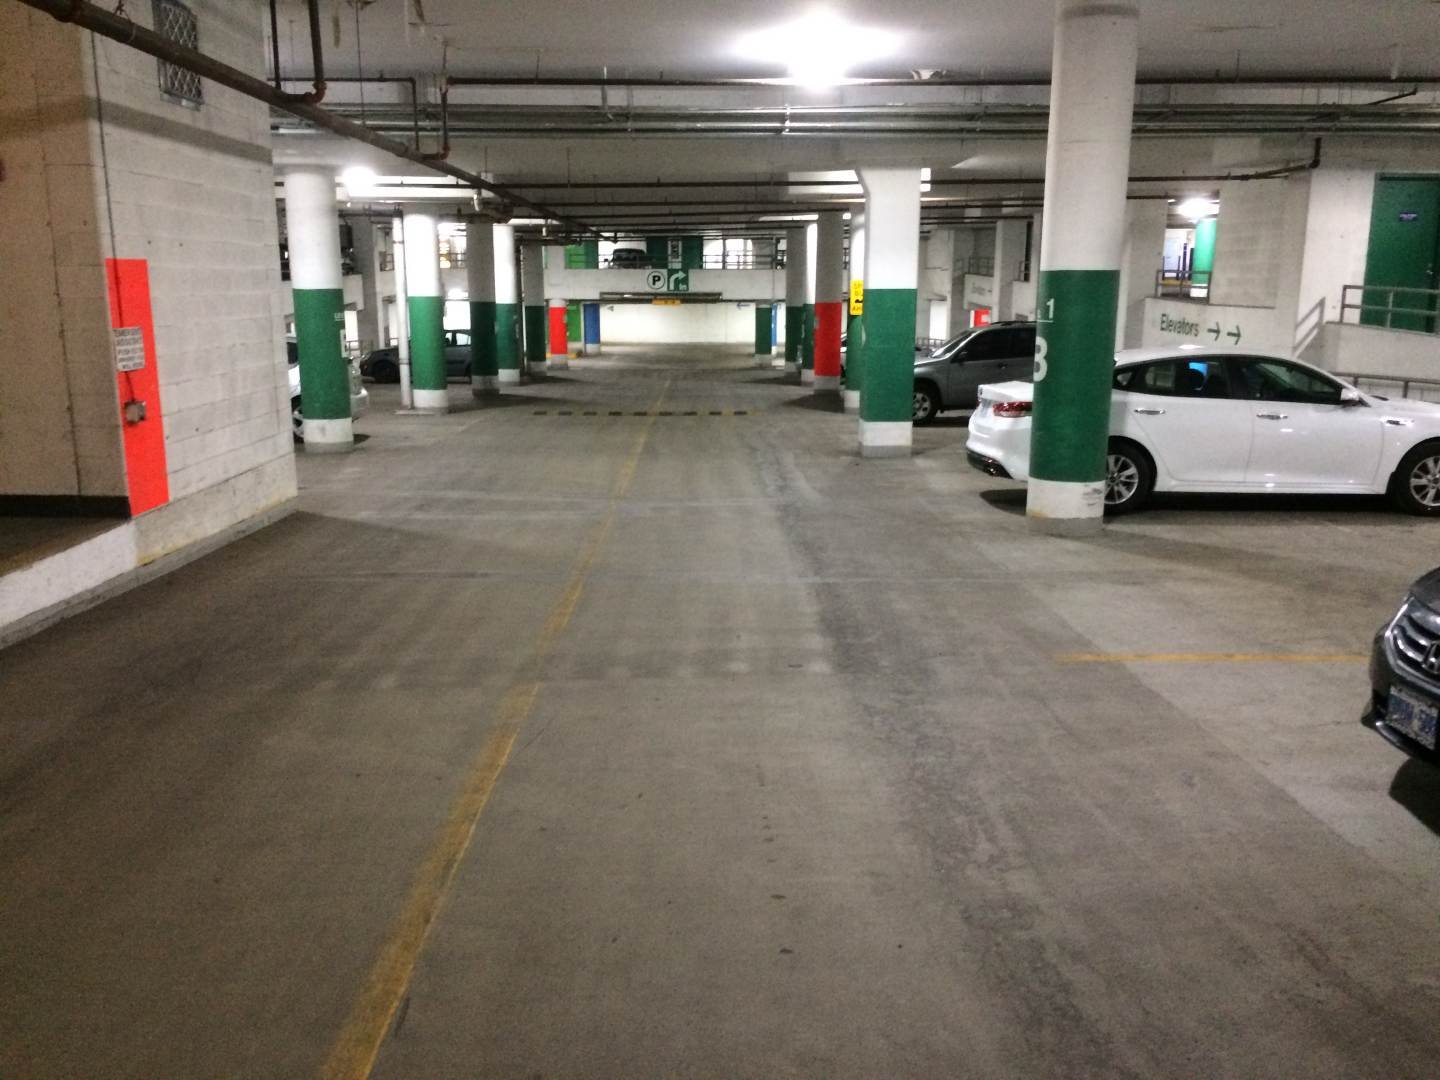 University of Toronto Rotman School of Business - Parking Garage Rehabilitation